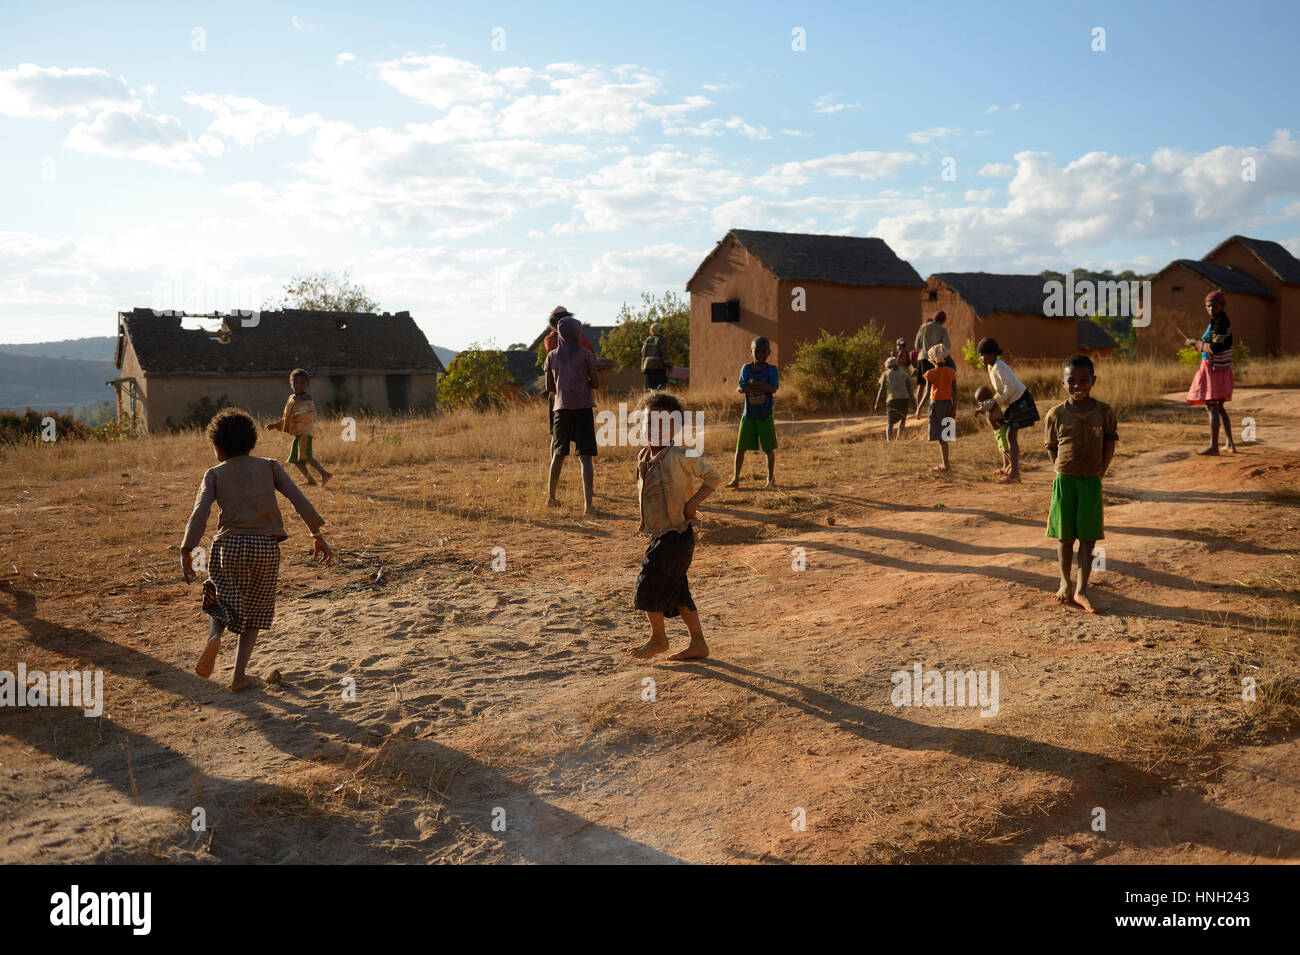 Children playing, village Tsaramadoandro, district Tsiroanomandidy region Bongolava, Madagascar Stock Photo